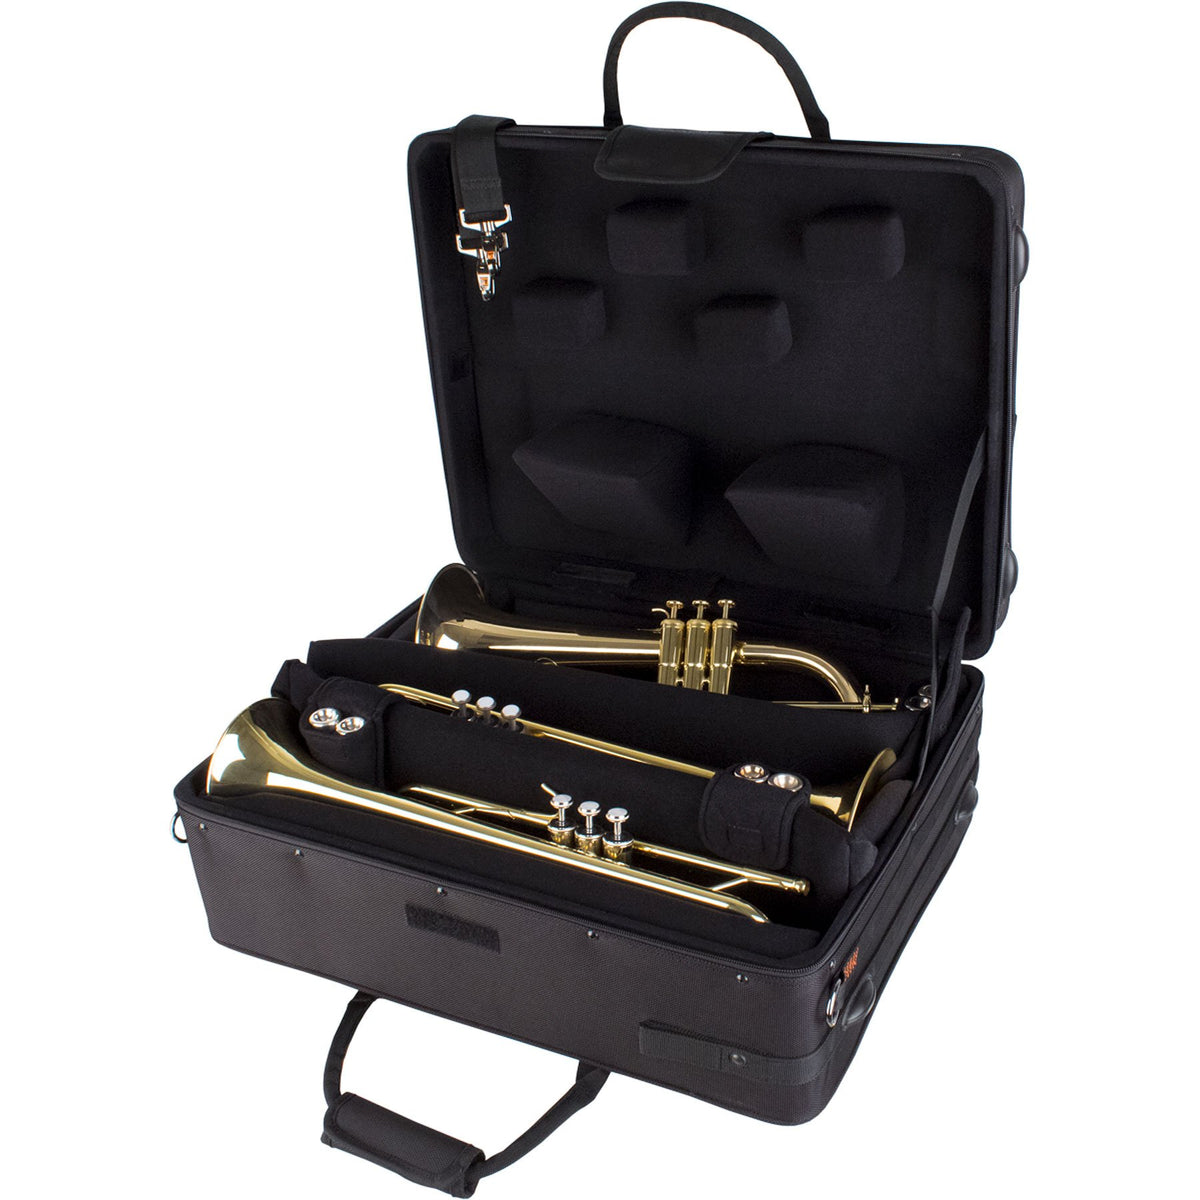 Protec - Quad Horn IPAC Case (Trumpet/Flugelhorn)-Case-Protec-Music Elements